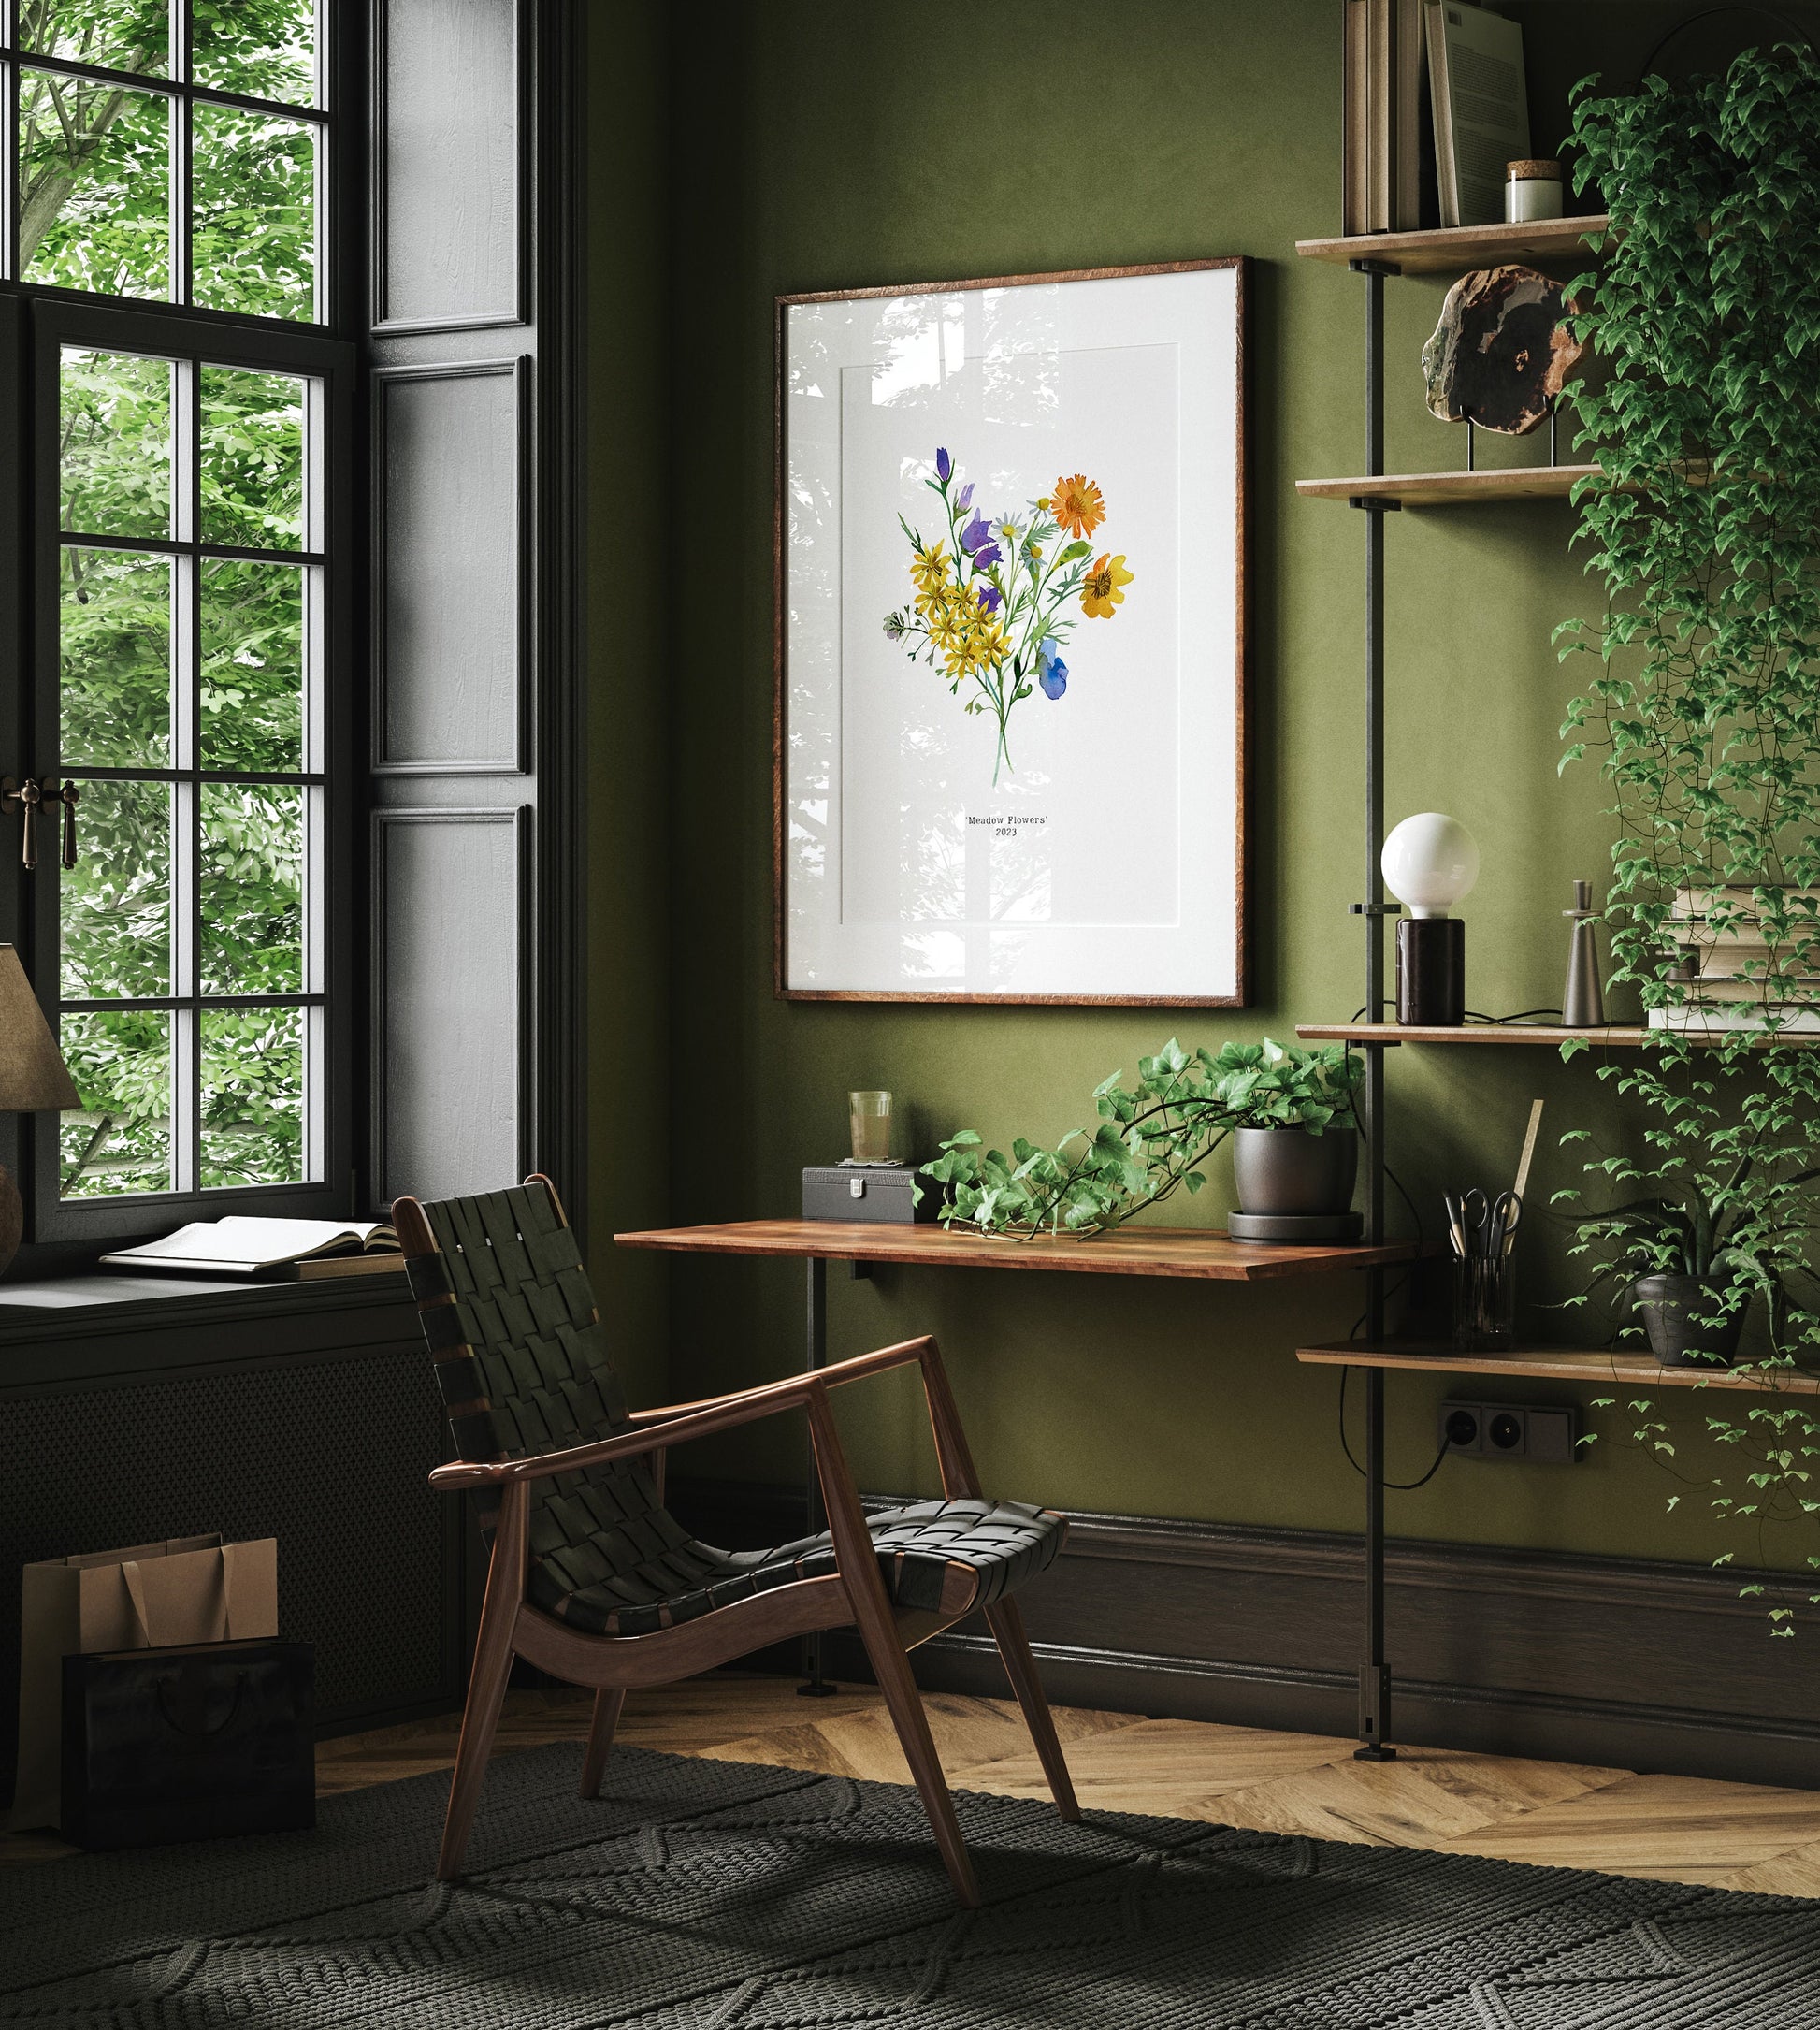 Meadow Flowers Print, Boho Home Décor, Meadow Flowers Wall Art, Flower Prints, Living Room, A5/A4/A3/A2/A1, Flower Illustration